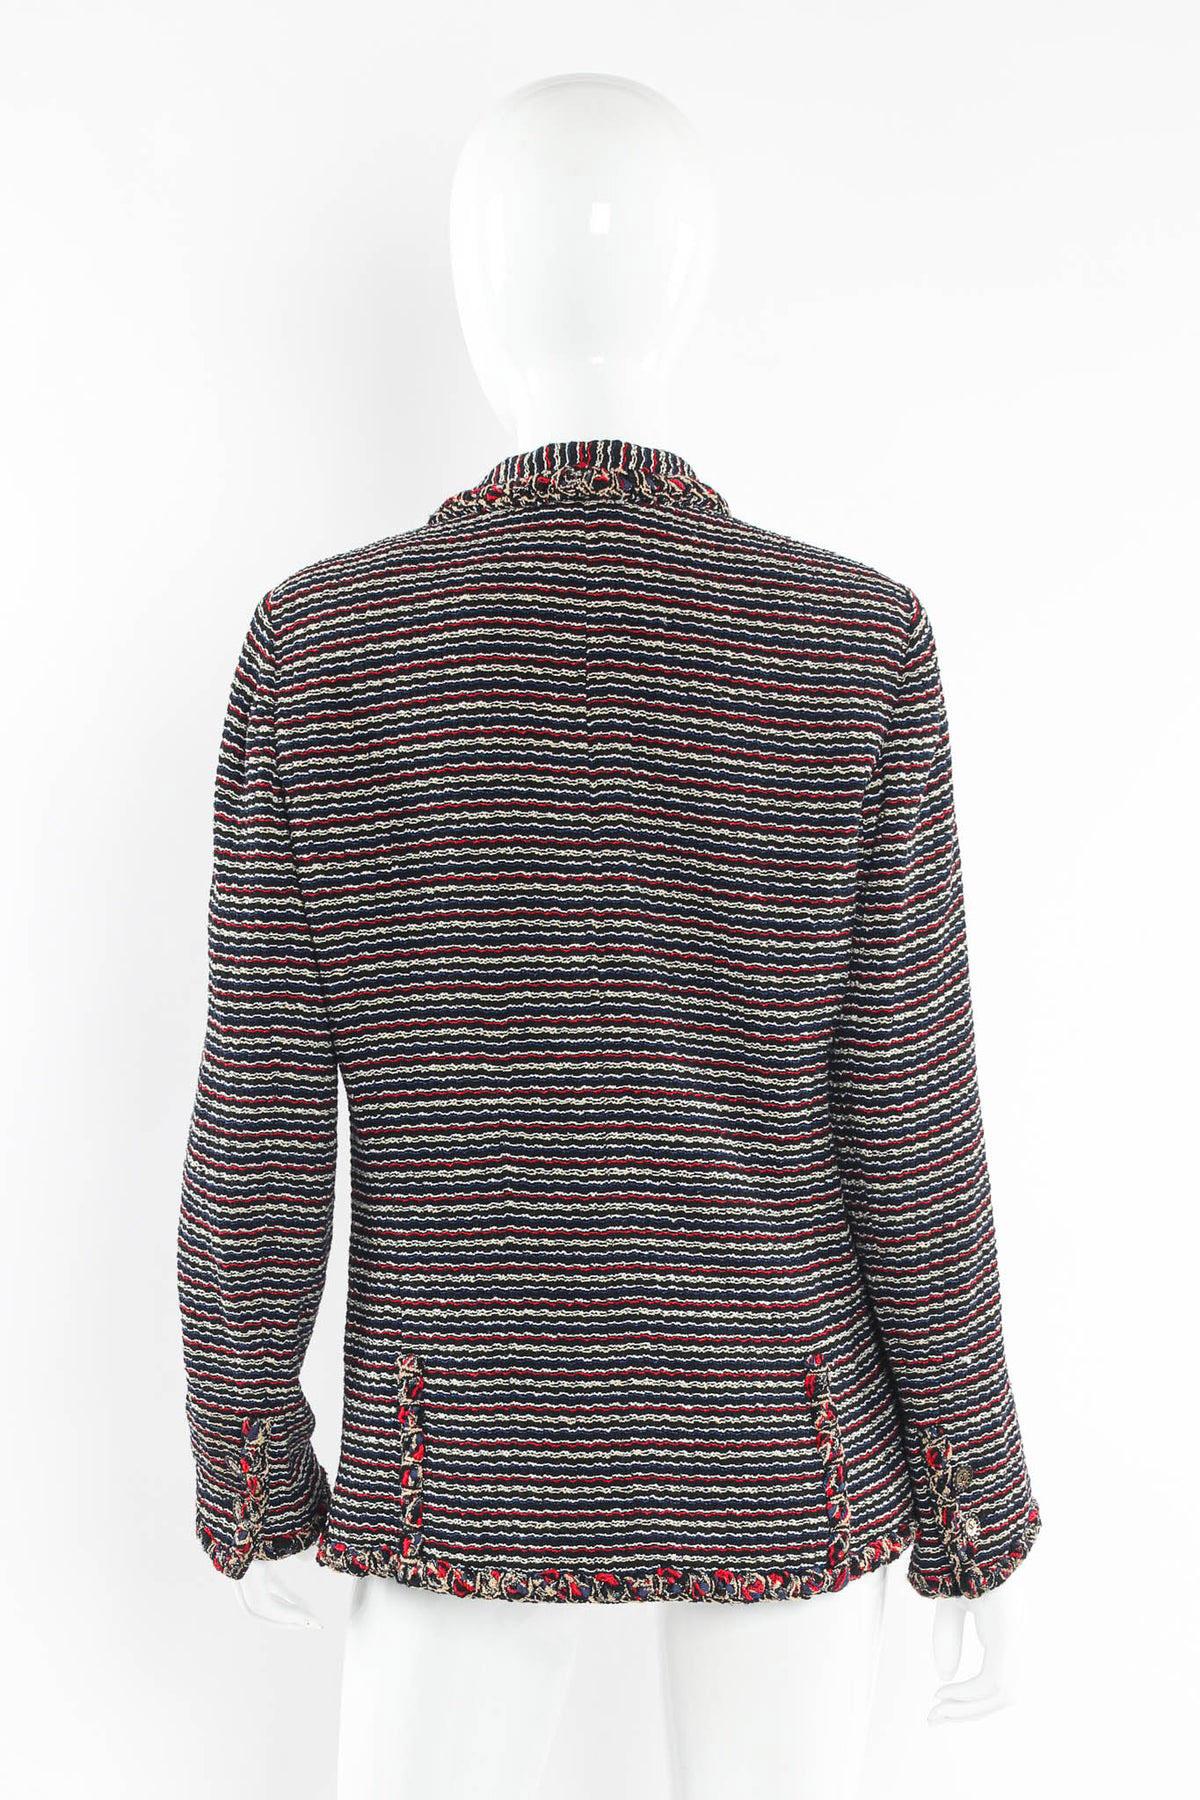 Chanel Runway Saint-Tropez Lesage Tweed Jacket For Sale 8